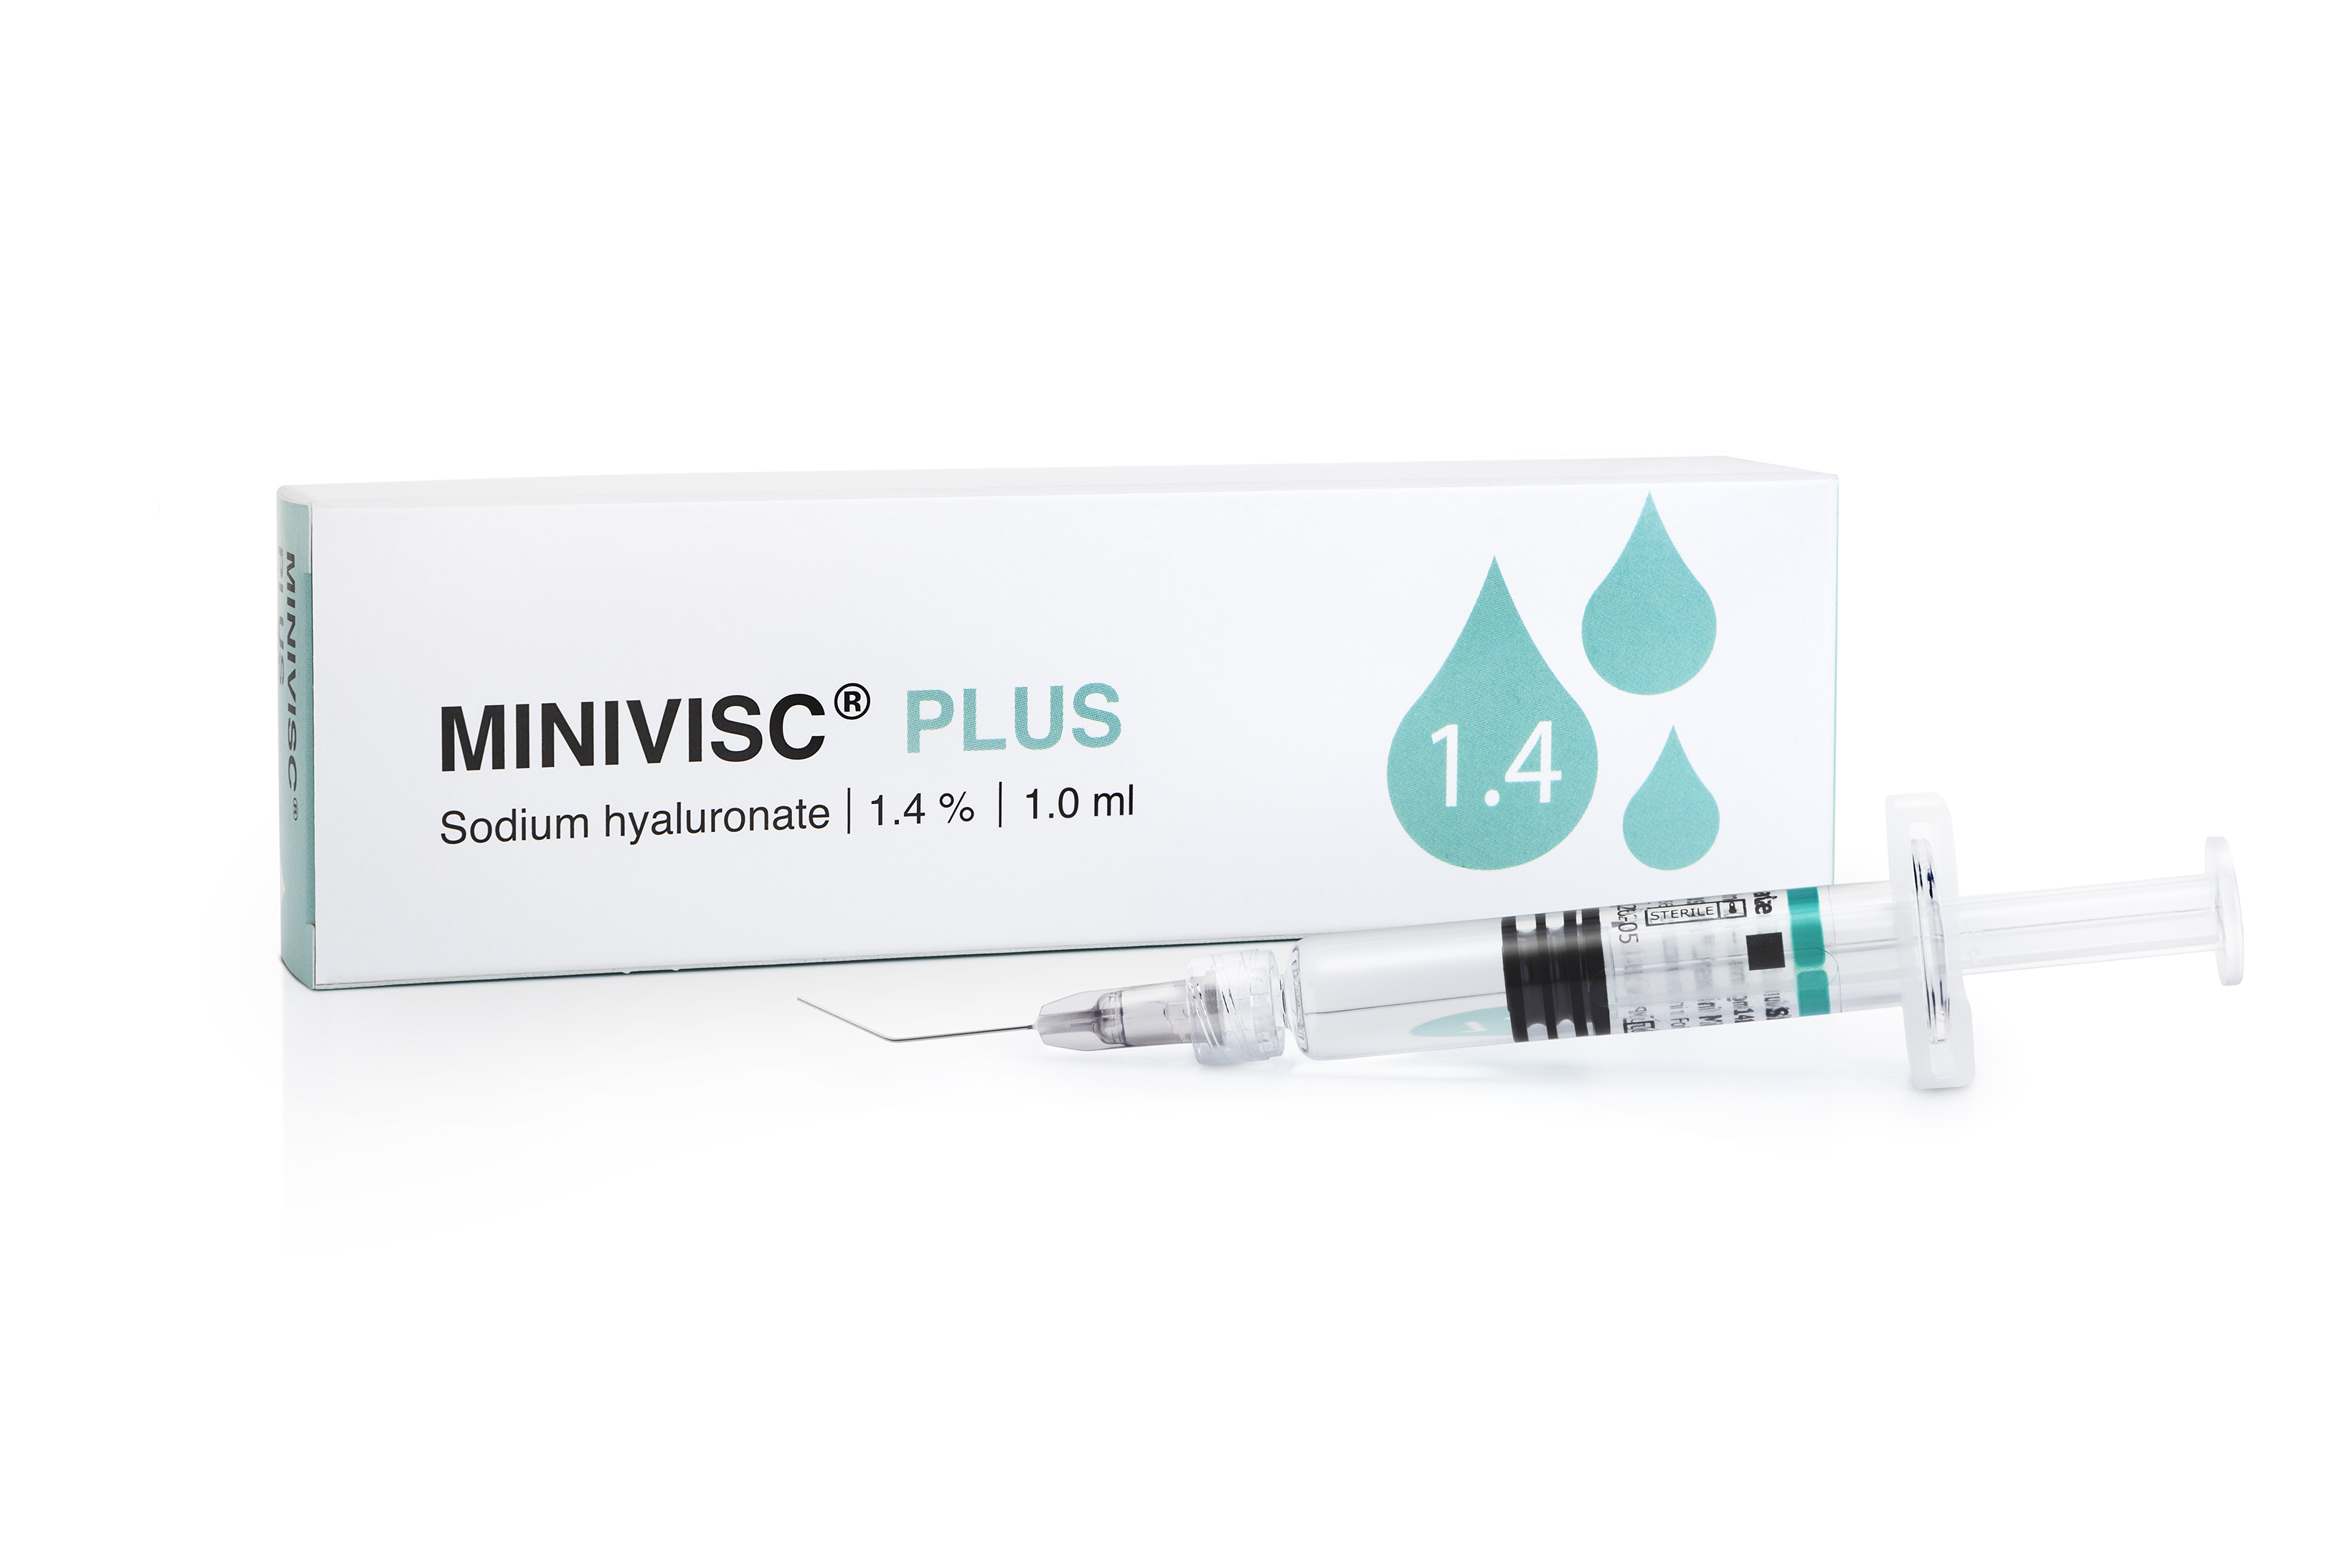 Minivisc Box and Syringe on White_complete